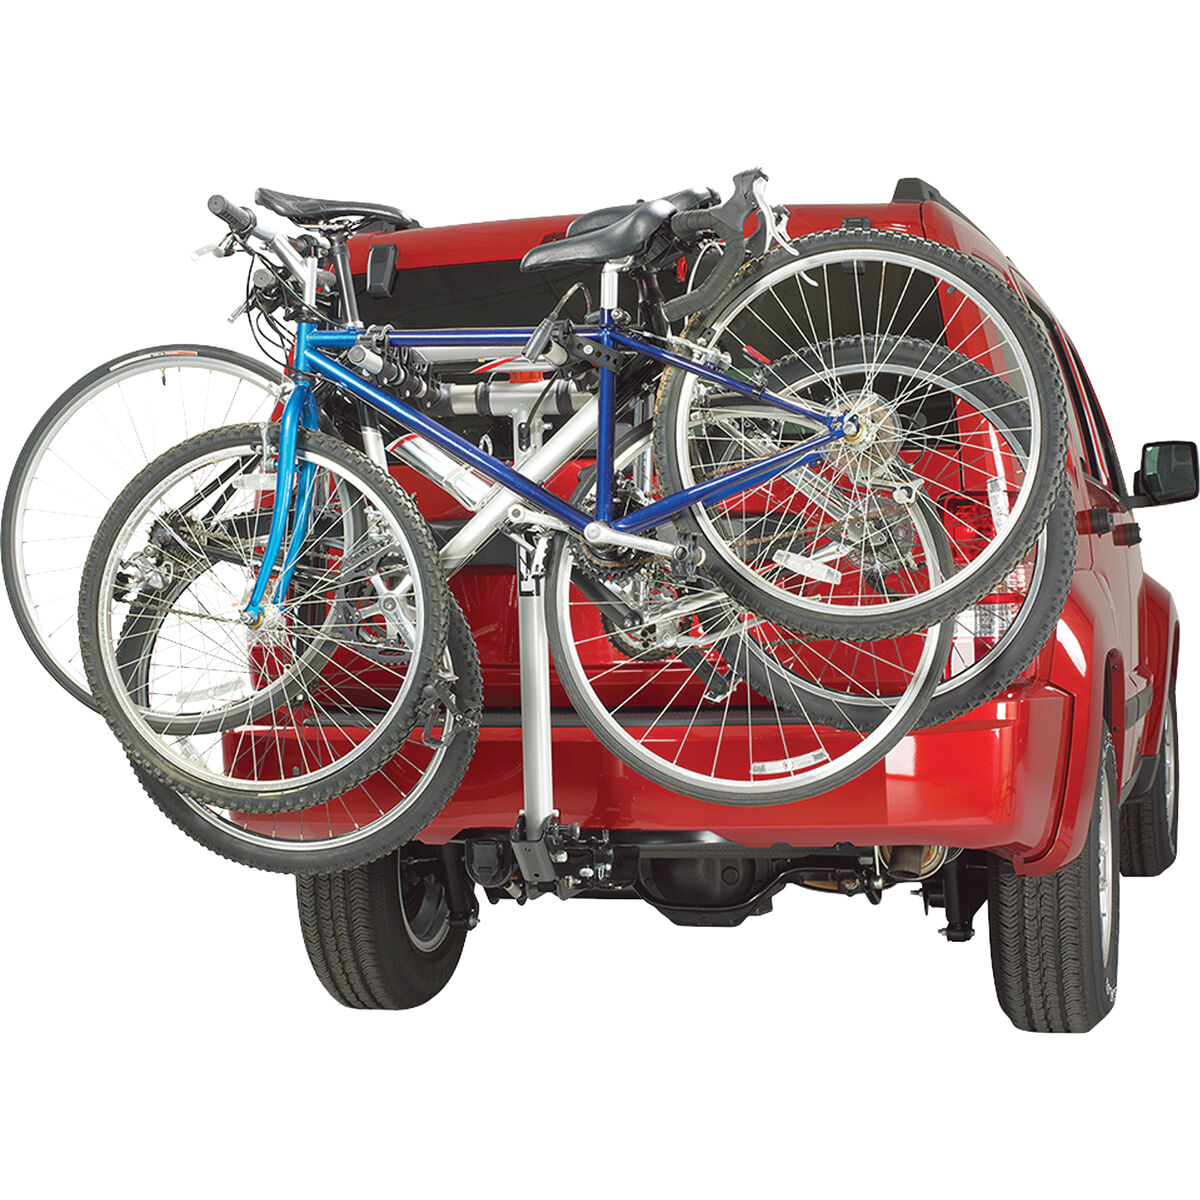 3 bike rack for car